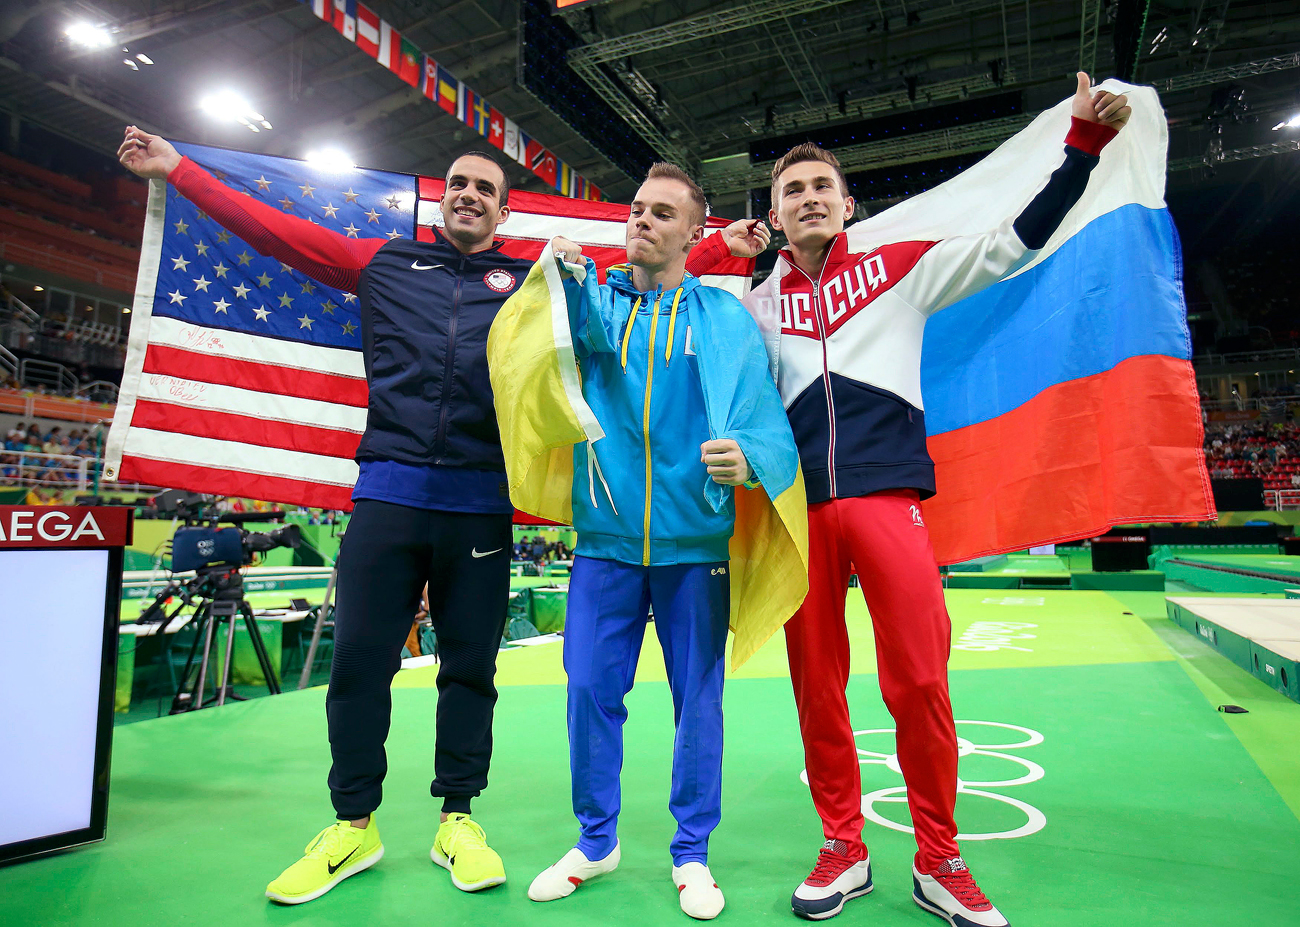 Rio Olympics - Artistic Gymnastics - Final - Men's Parallel Bars Final. First placed Oleg Verniaiev (UKR) of Ukraine, second placed Danell Leyva (USA) of USA, and third placed David Belyavskiy (RUS)